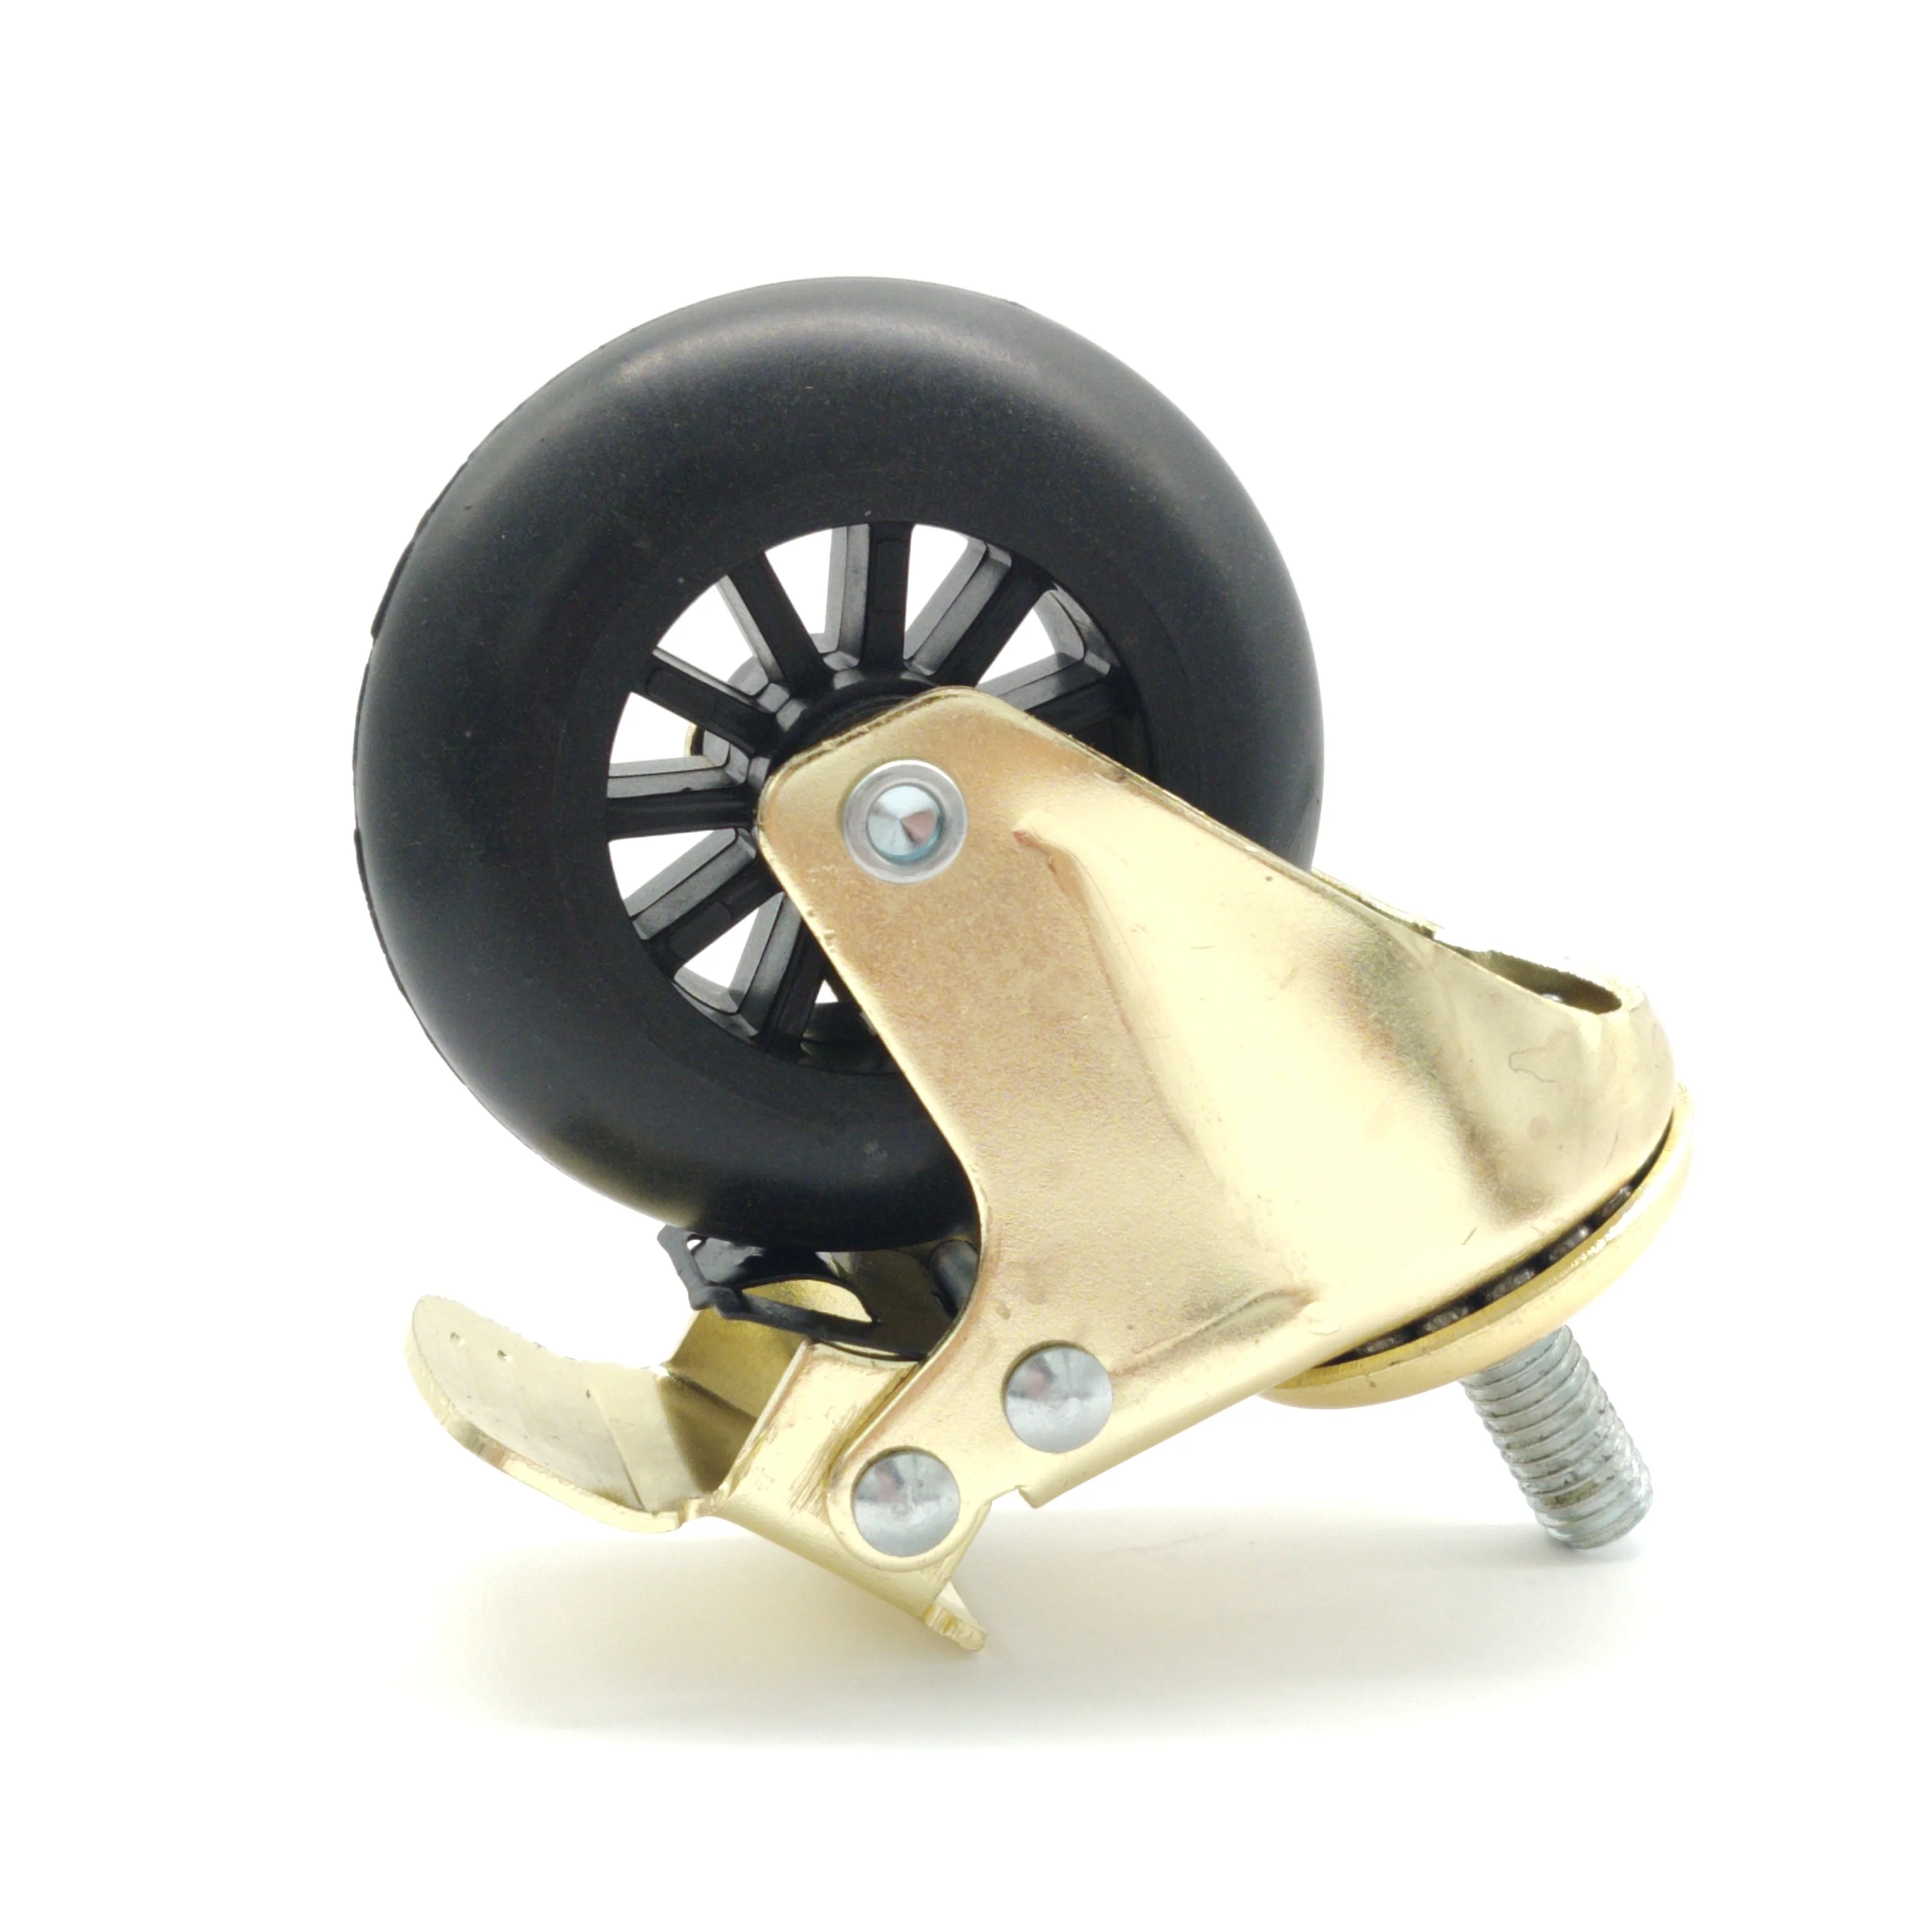 70 mm Dual Lock And Brake 100 kgs Loading Capacity Removable Plastic Nylon Caster wheels